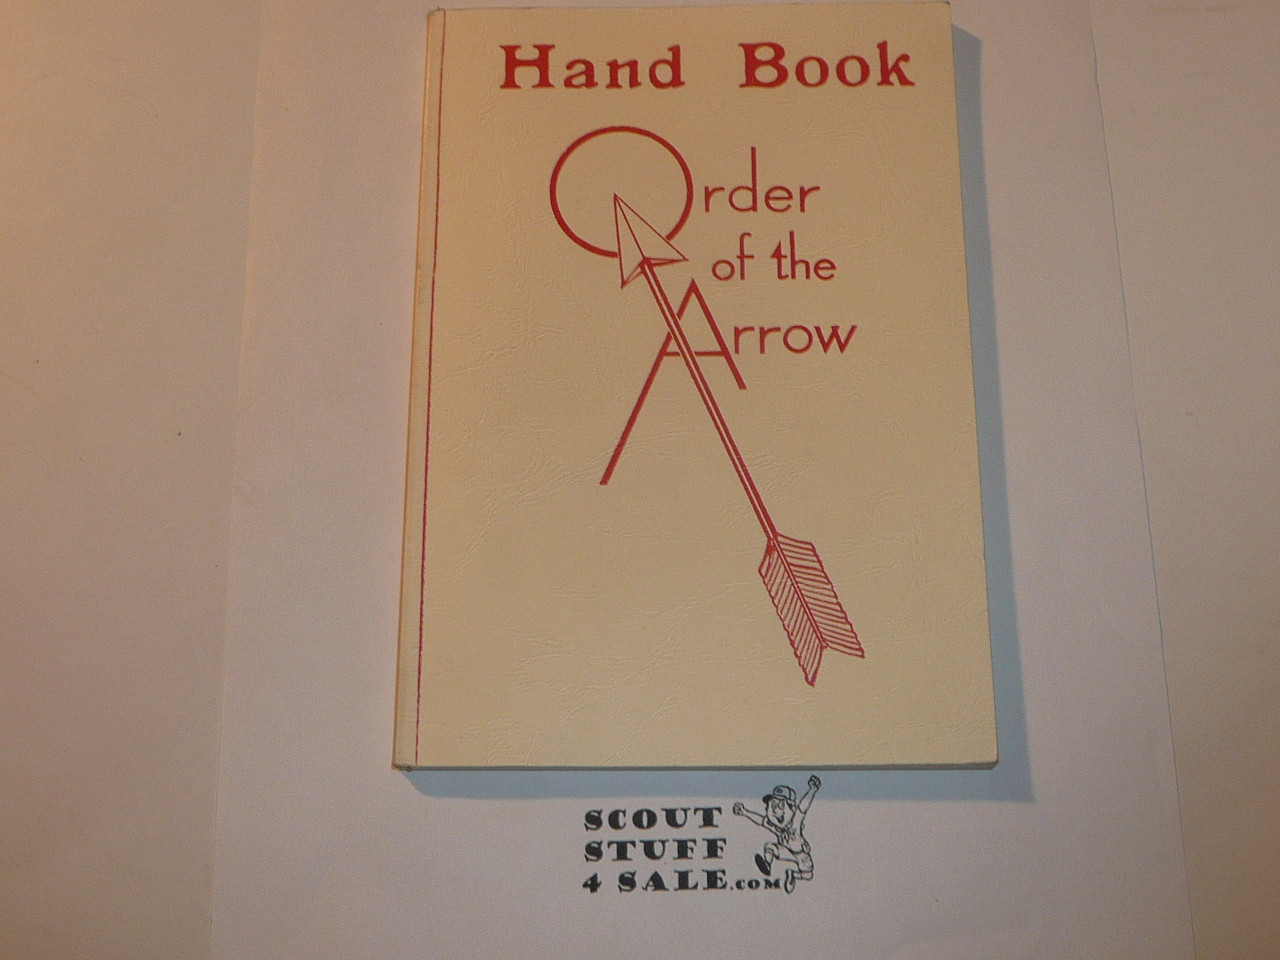 1948 Order of the Arrow Handbook, October 1948 Printing Reprint done in 2004